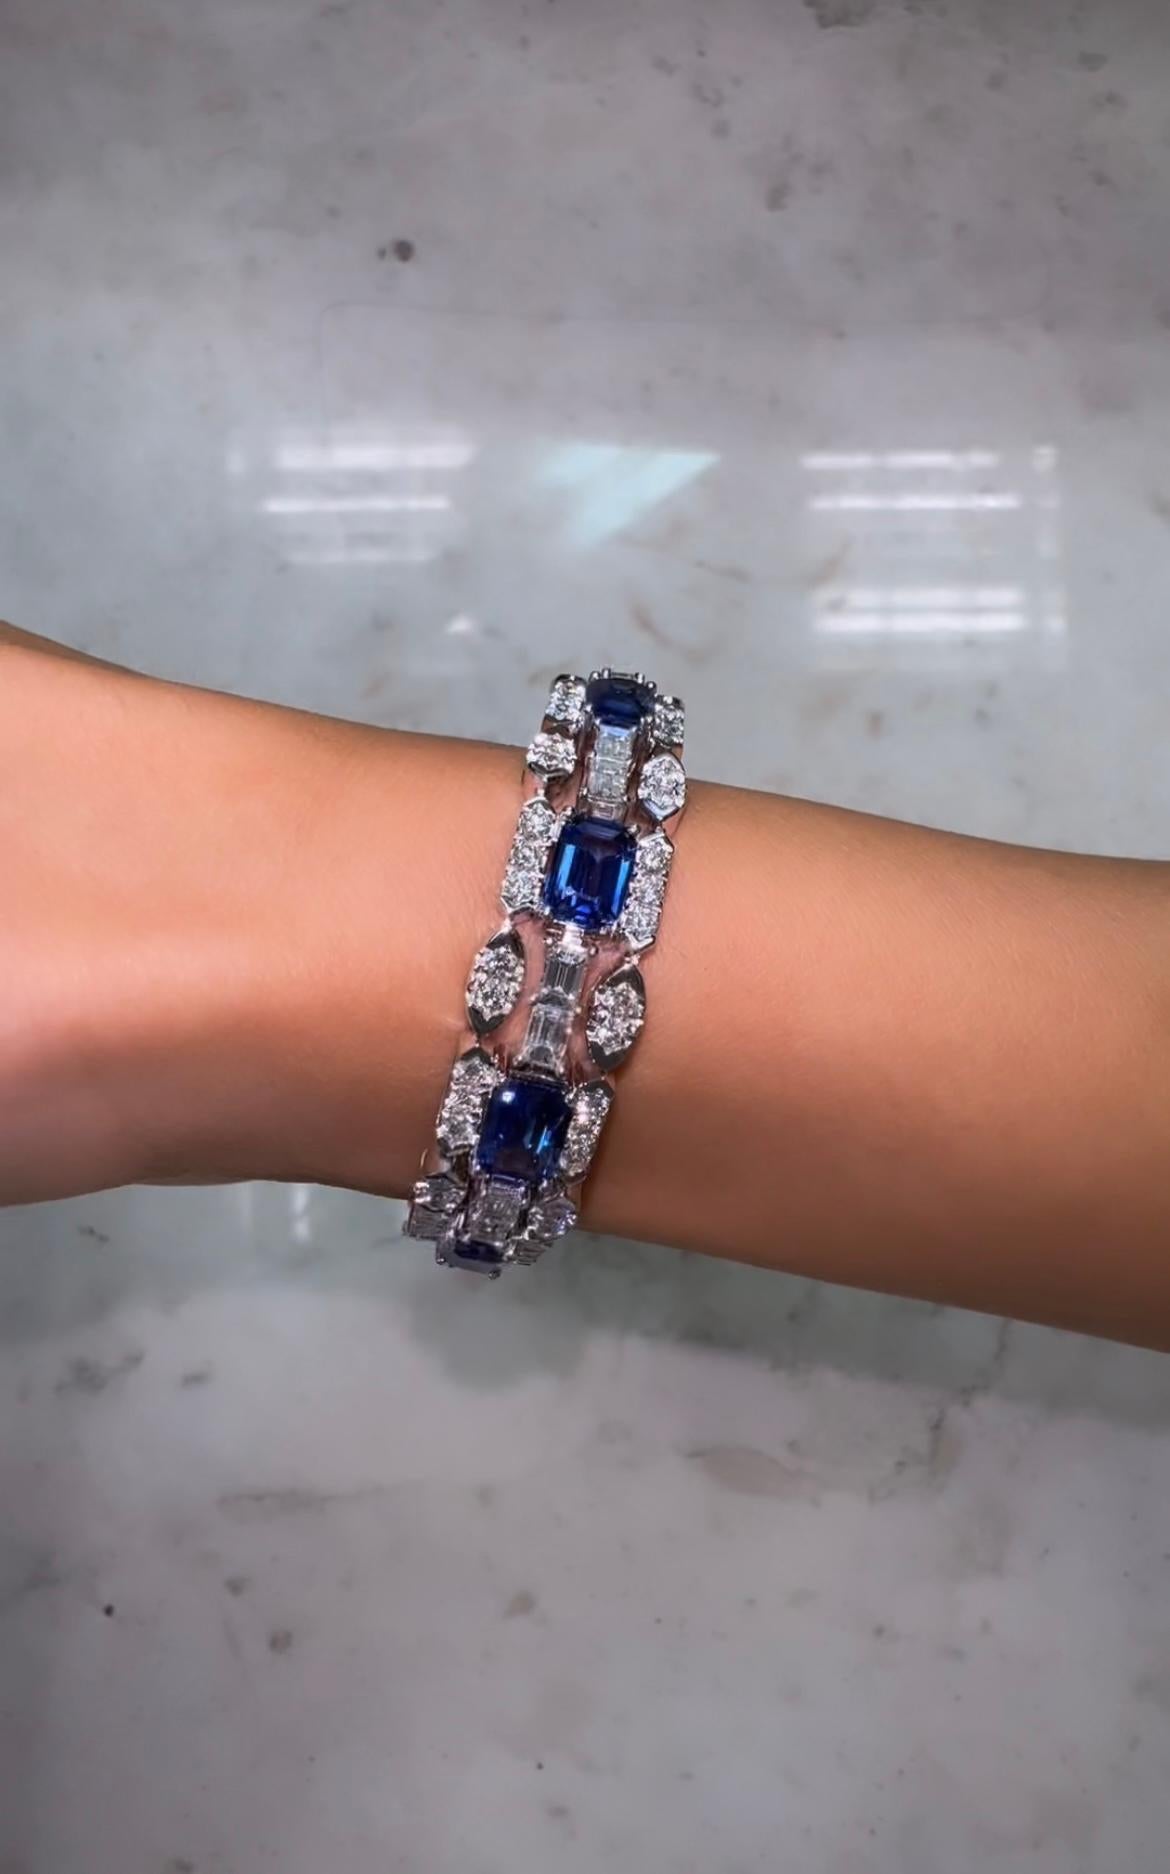 royal blue hued premium blue ceylon sapphire bracelet